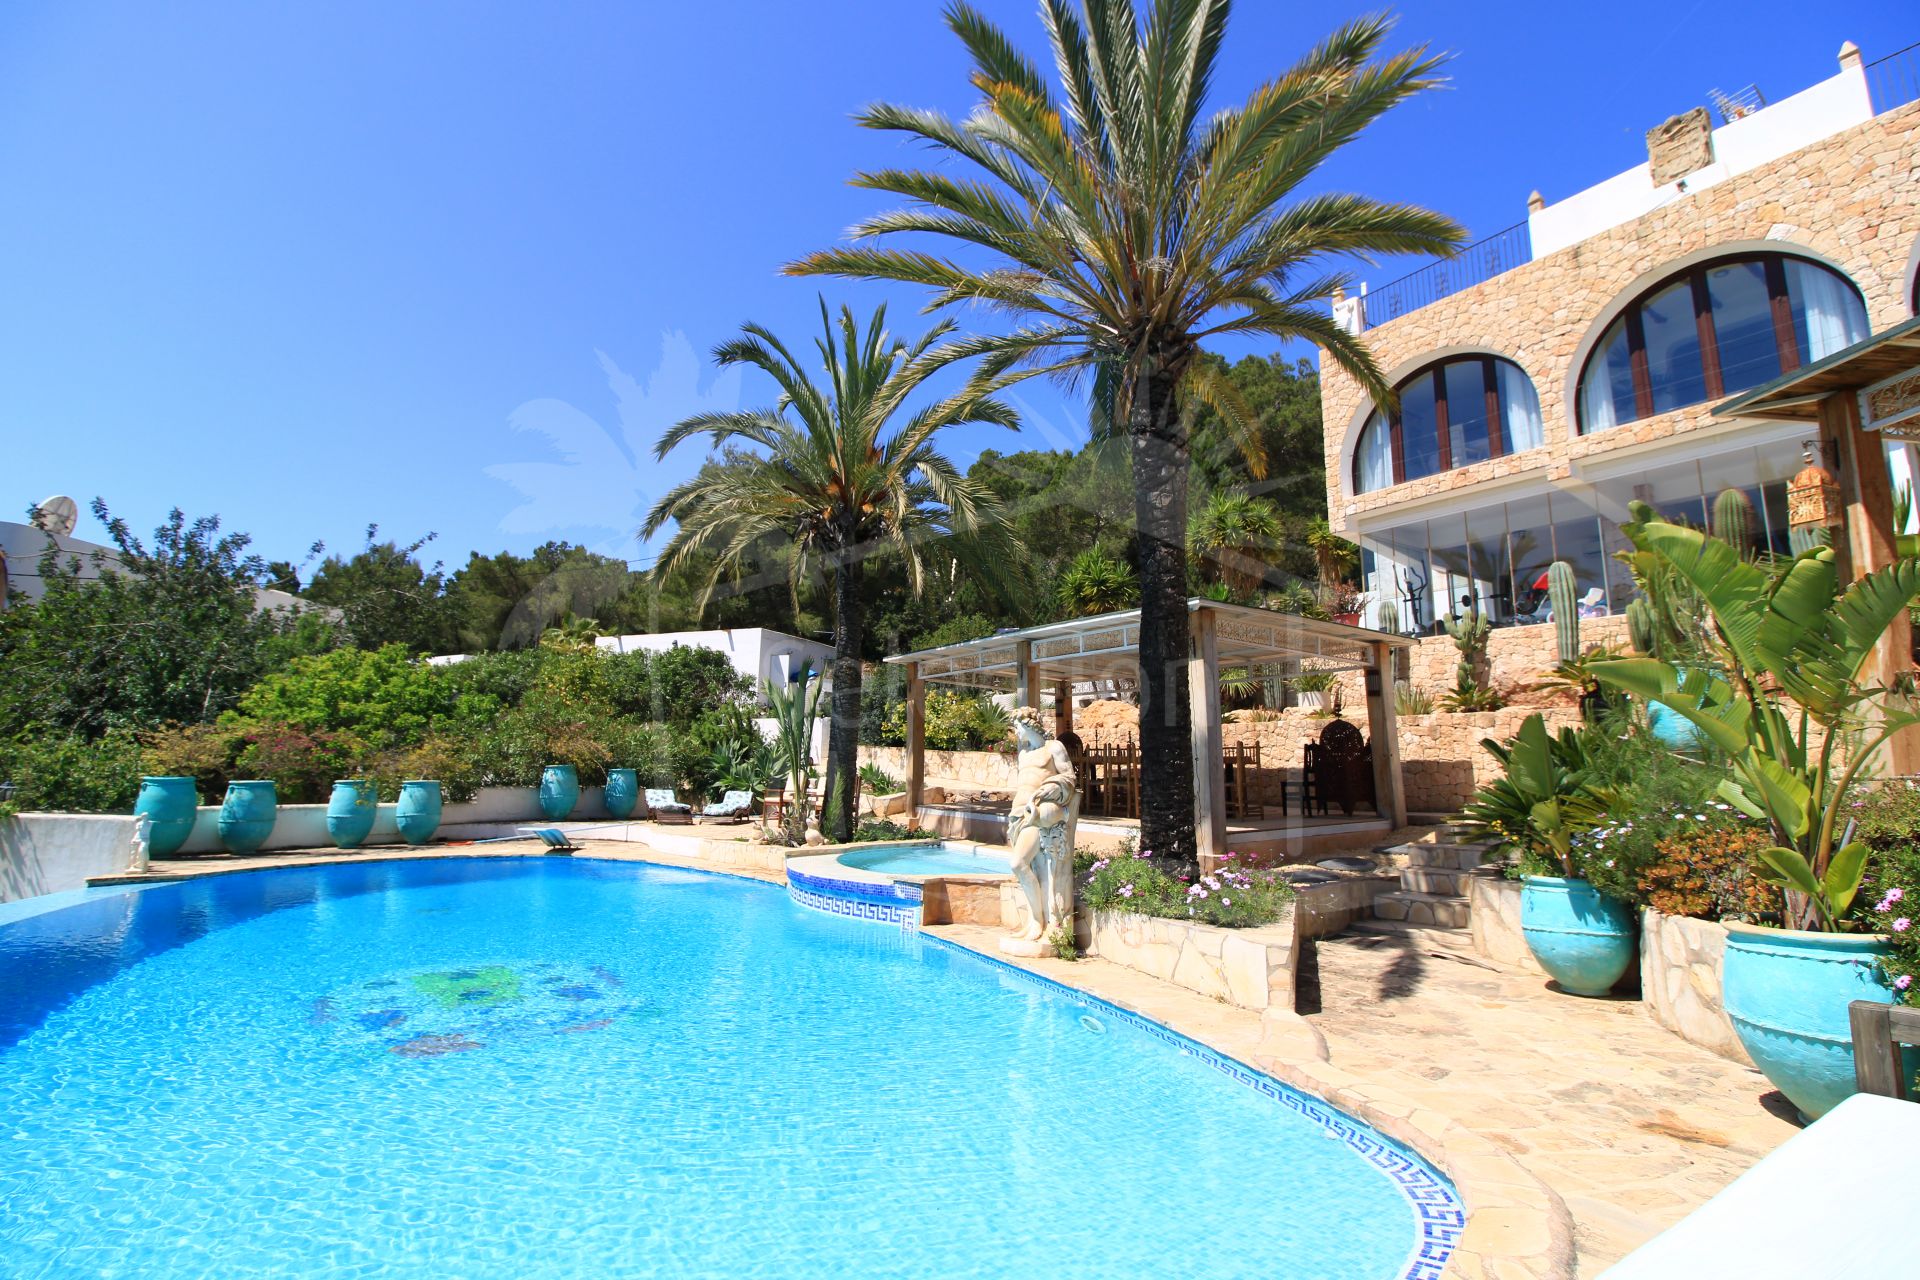 Exclusive villa with panoramic sea views in Santa Eulalia